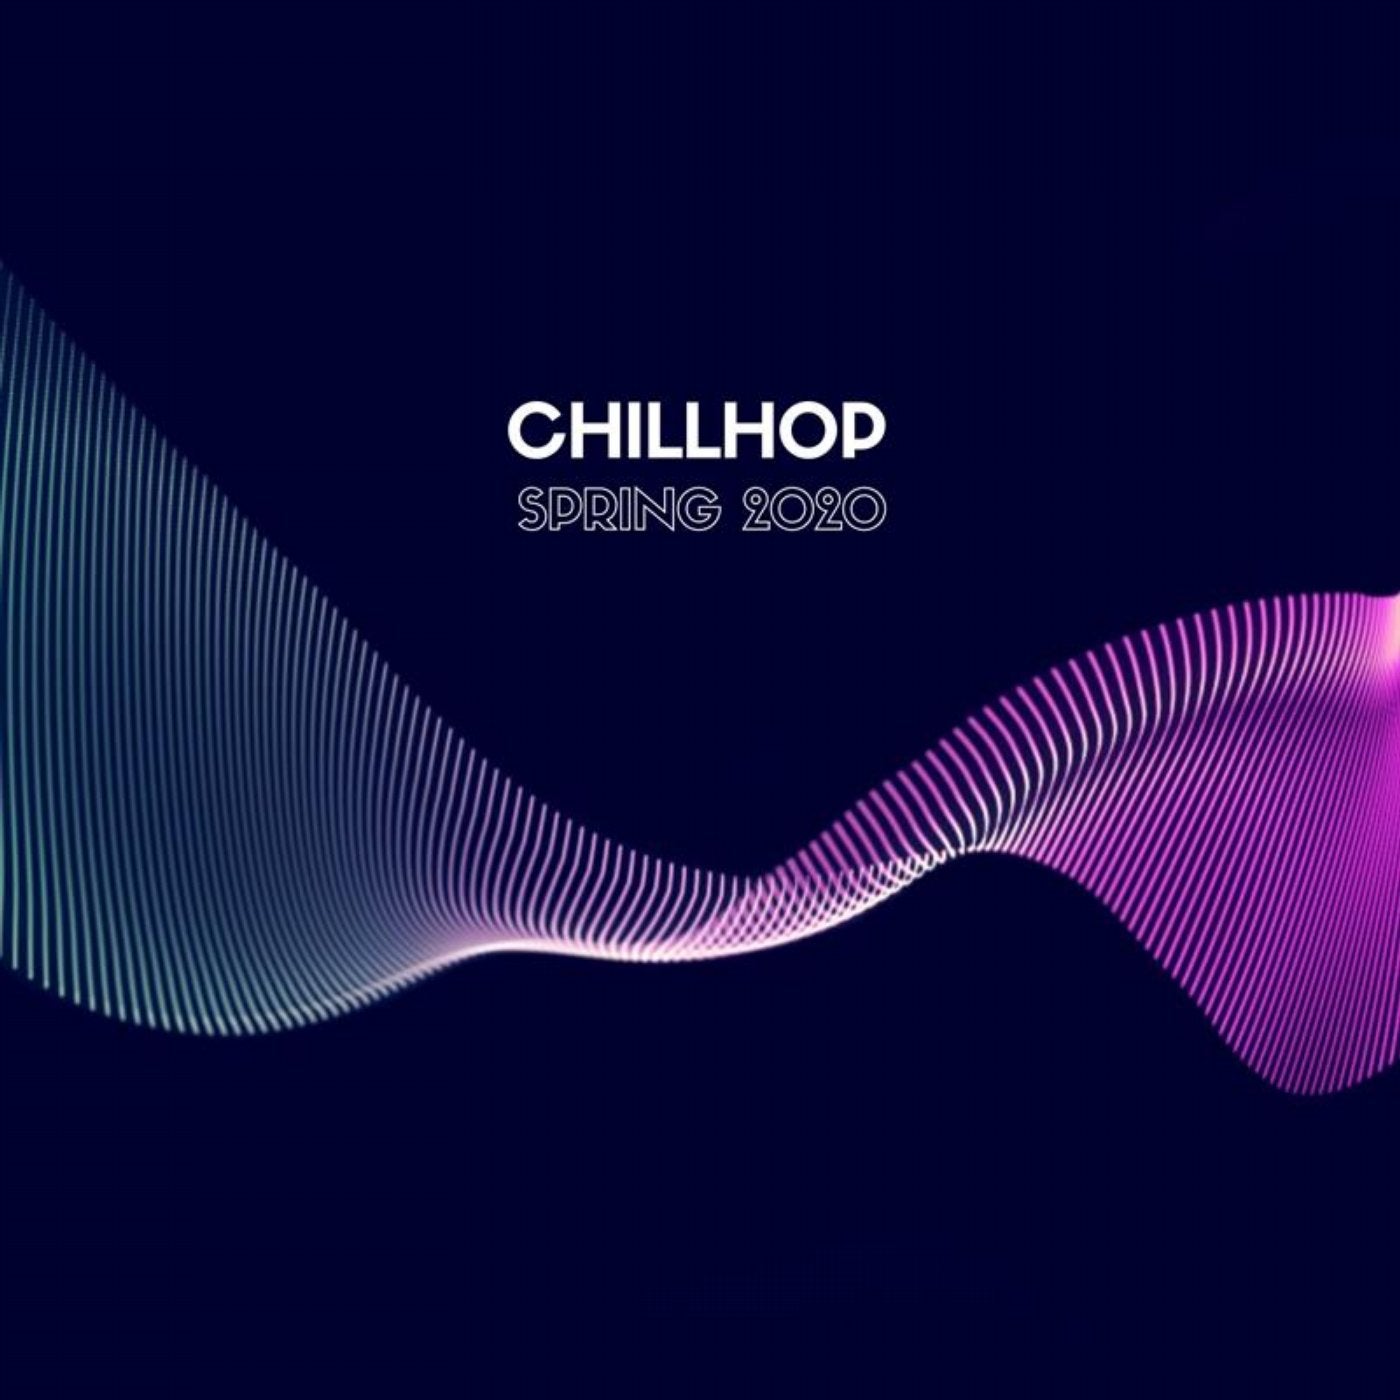 Chillhop Spring 2020